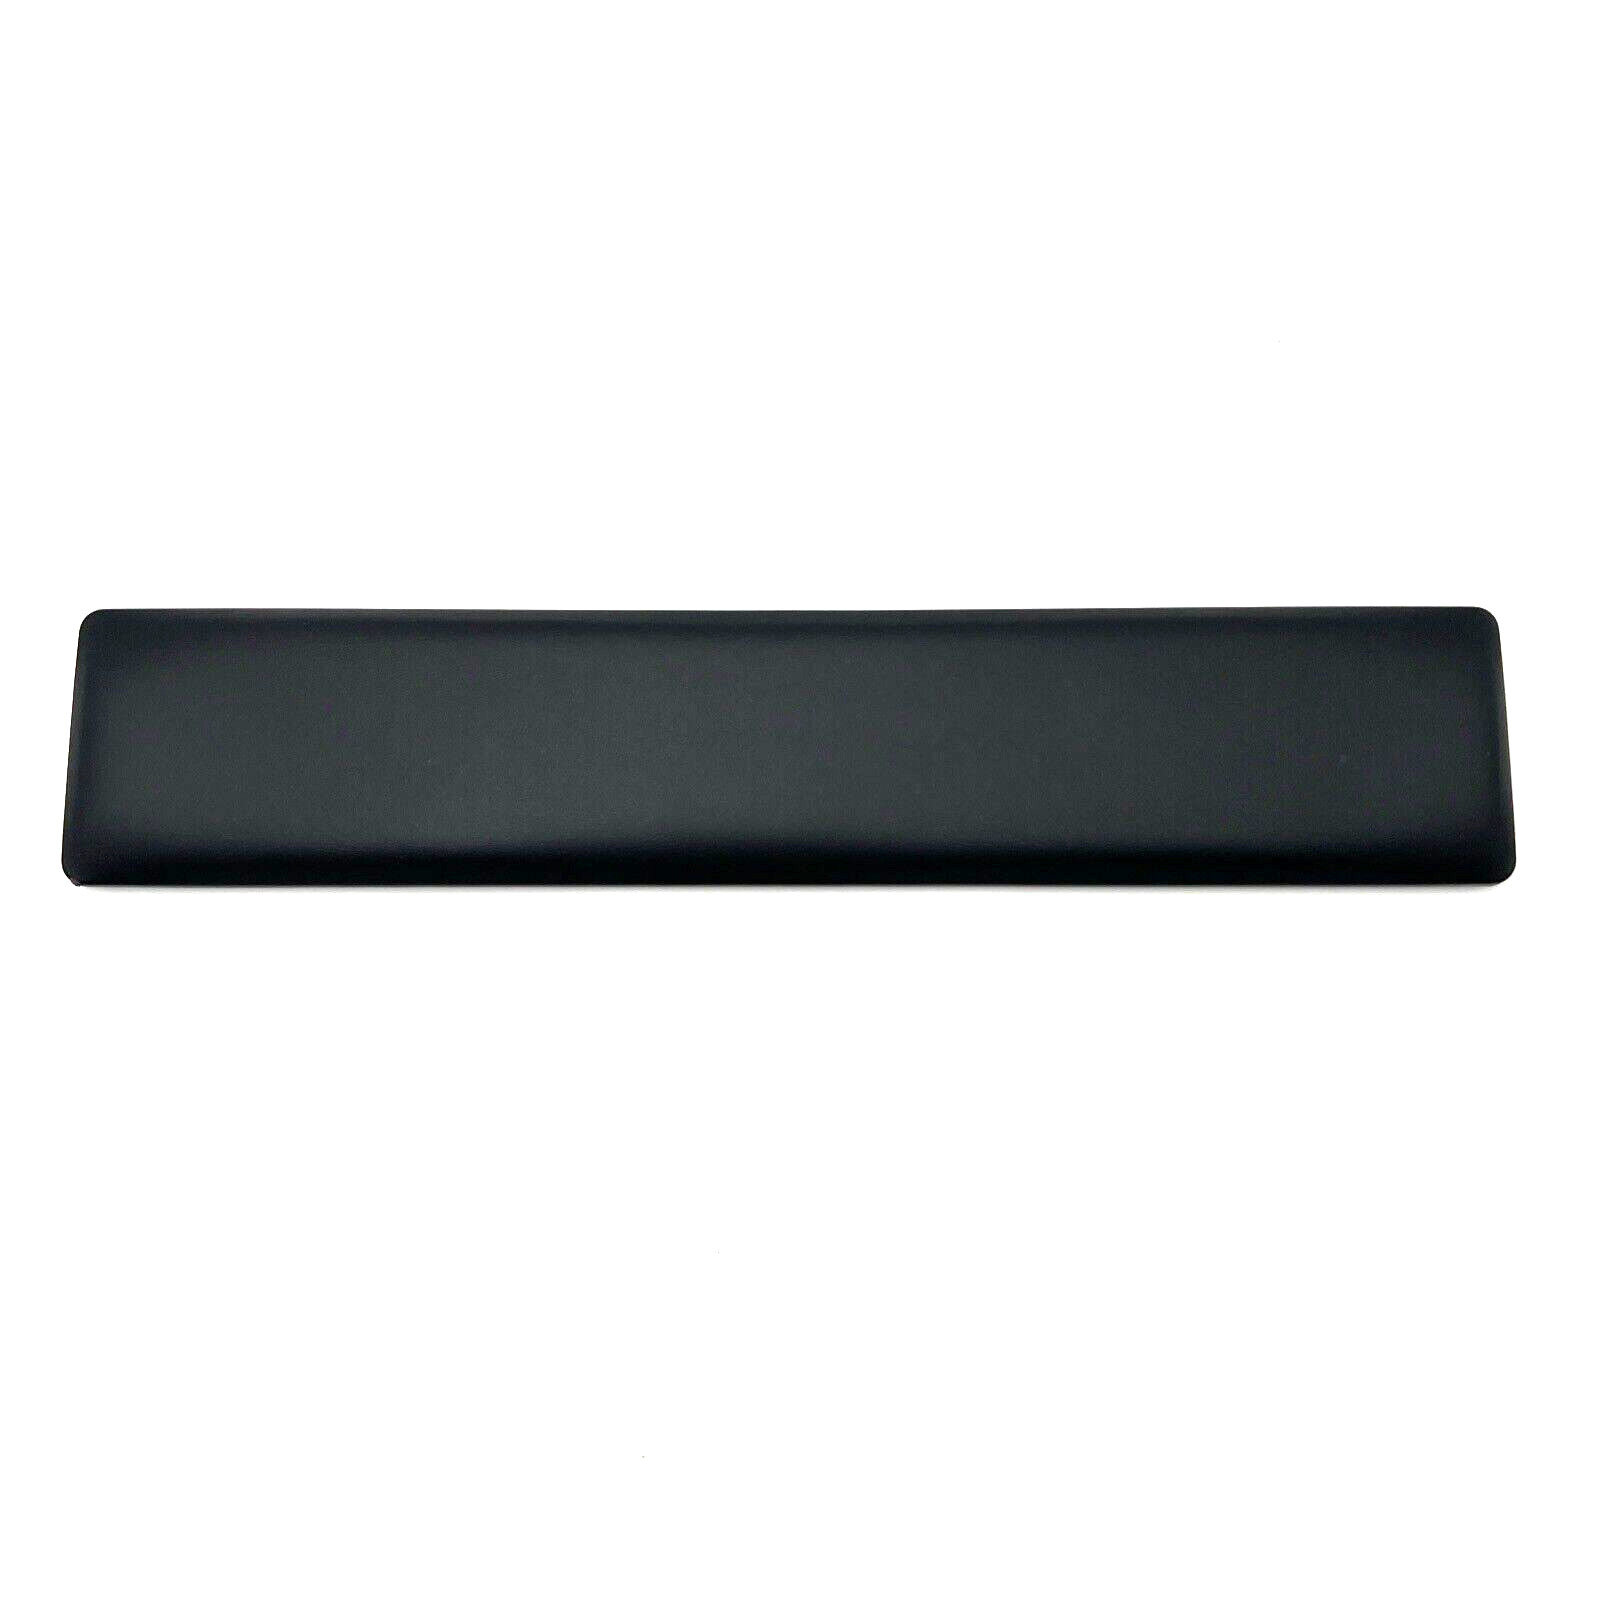 Original Logitech G513 Keyboard Palmrest Black Genuine Palm Rest